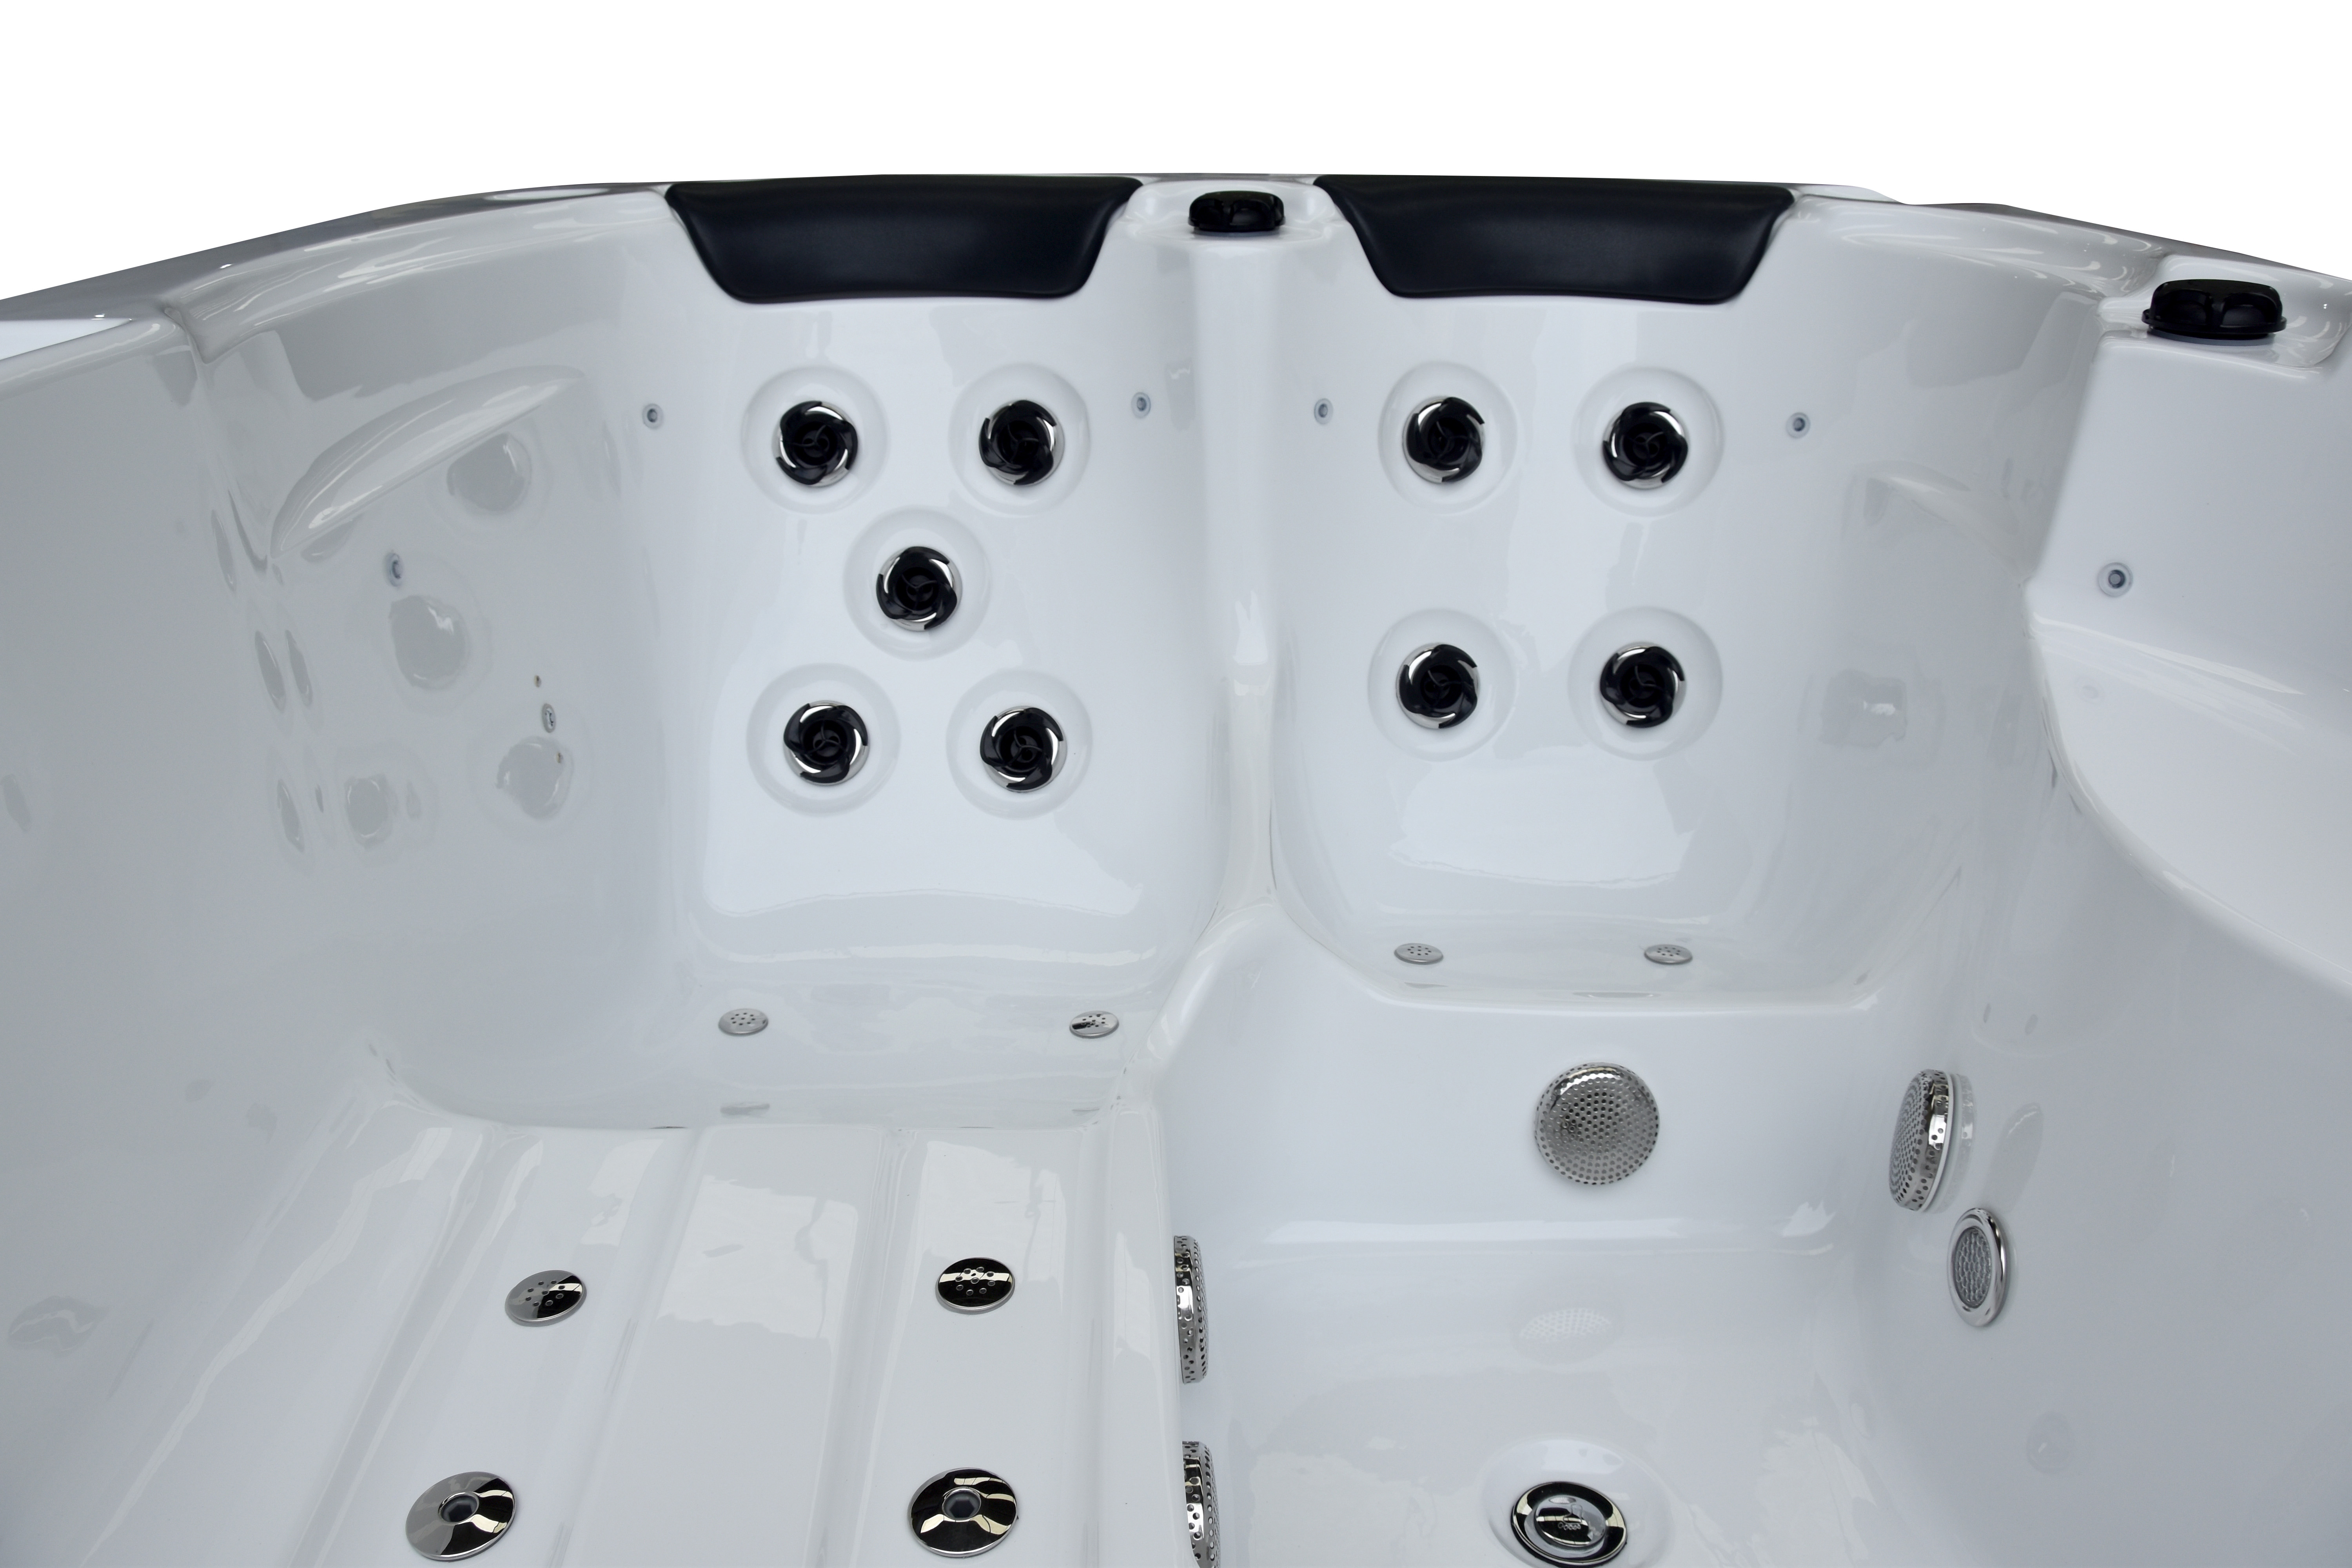 BG-8822 Factory Price Hot Spa Bath Tub Whirlpool with Balboa Control System 